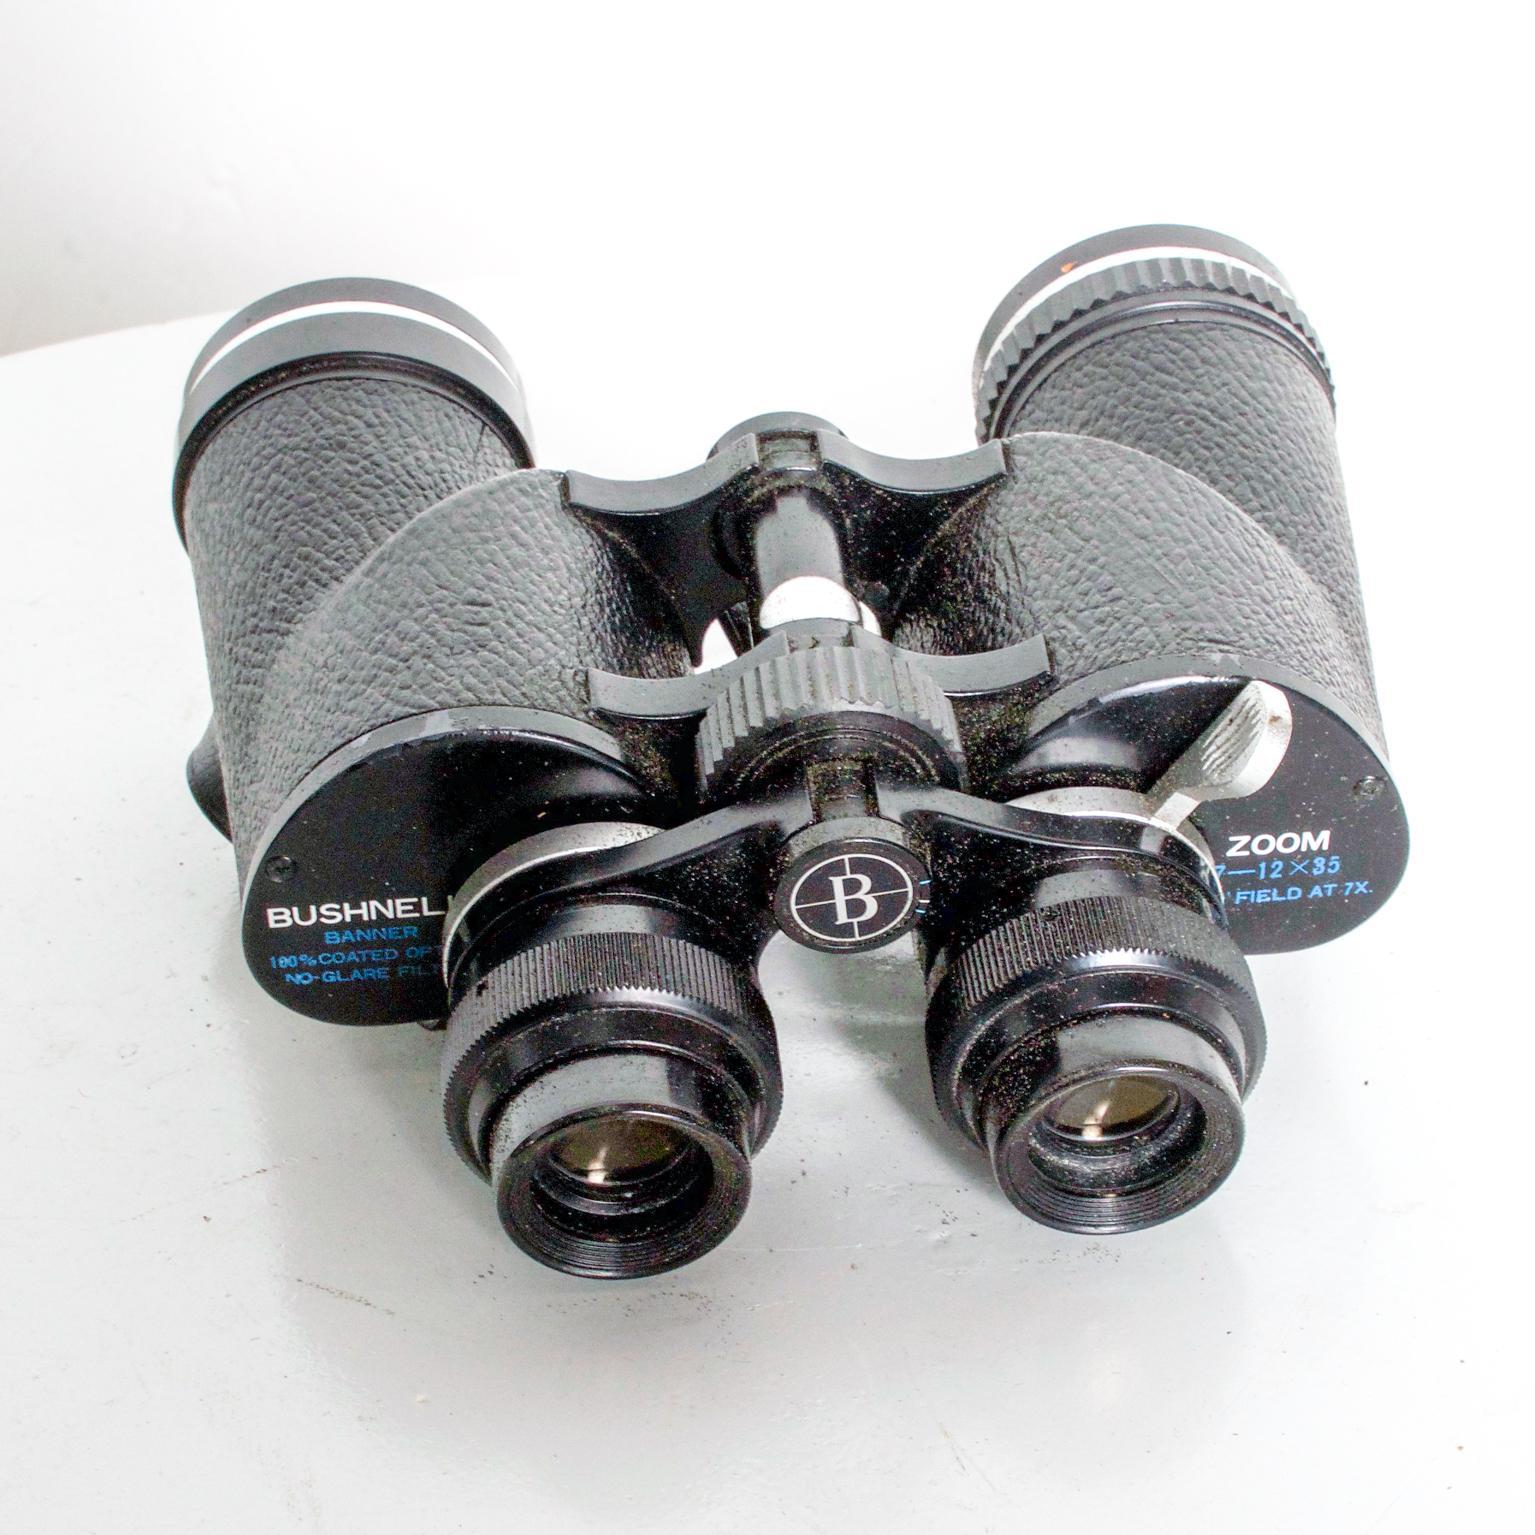 Glass Vintage Bushnell Binoculars with Original Case